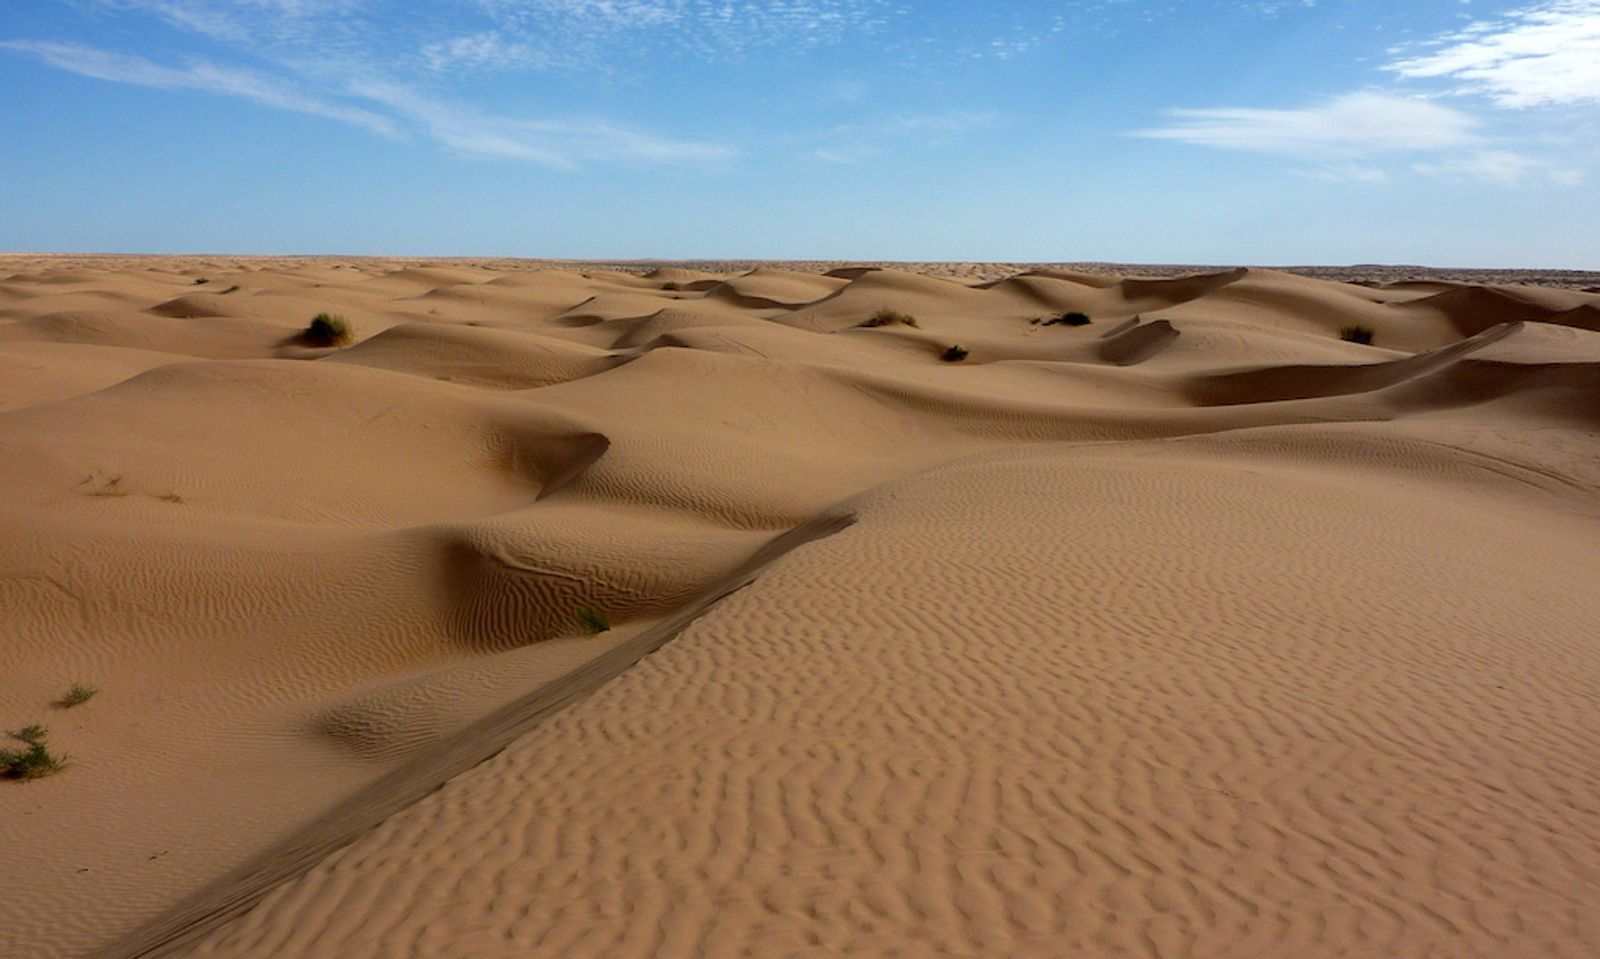 AI Algorithms Designed To Spot Nudes Mistake Desert Sand For Skin